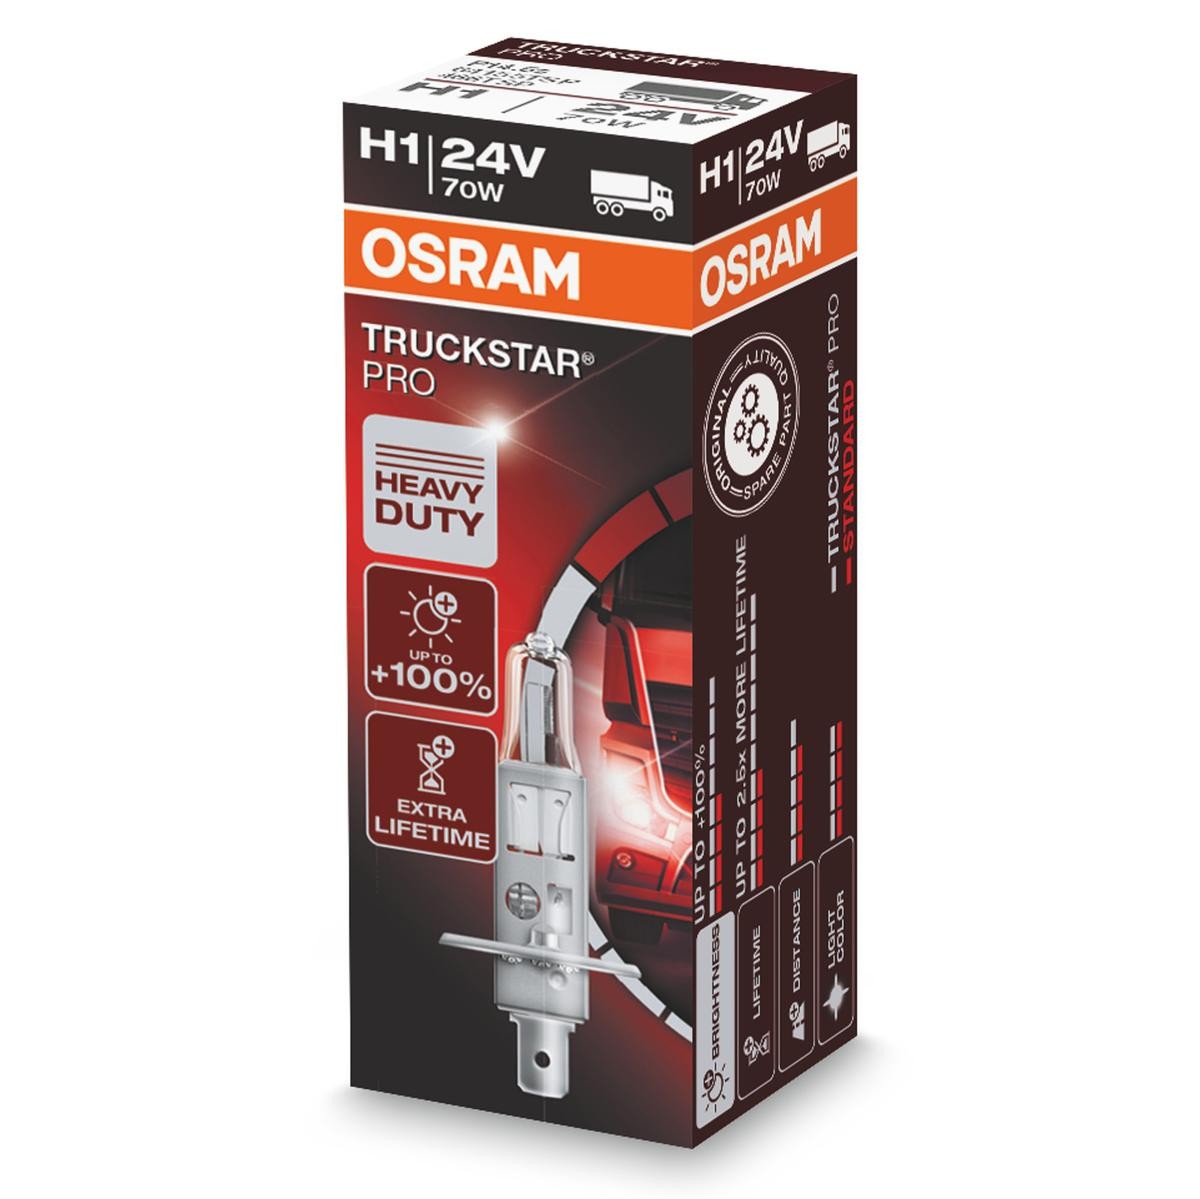 H1 OSRAM TRUCKSTAR PRO H1 24V 70W P14.5s, 3900K, Halogen Main beam bulb 64155TSP buy